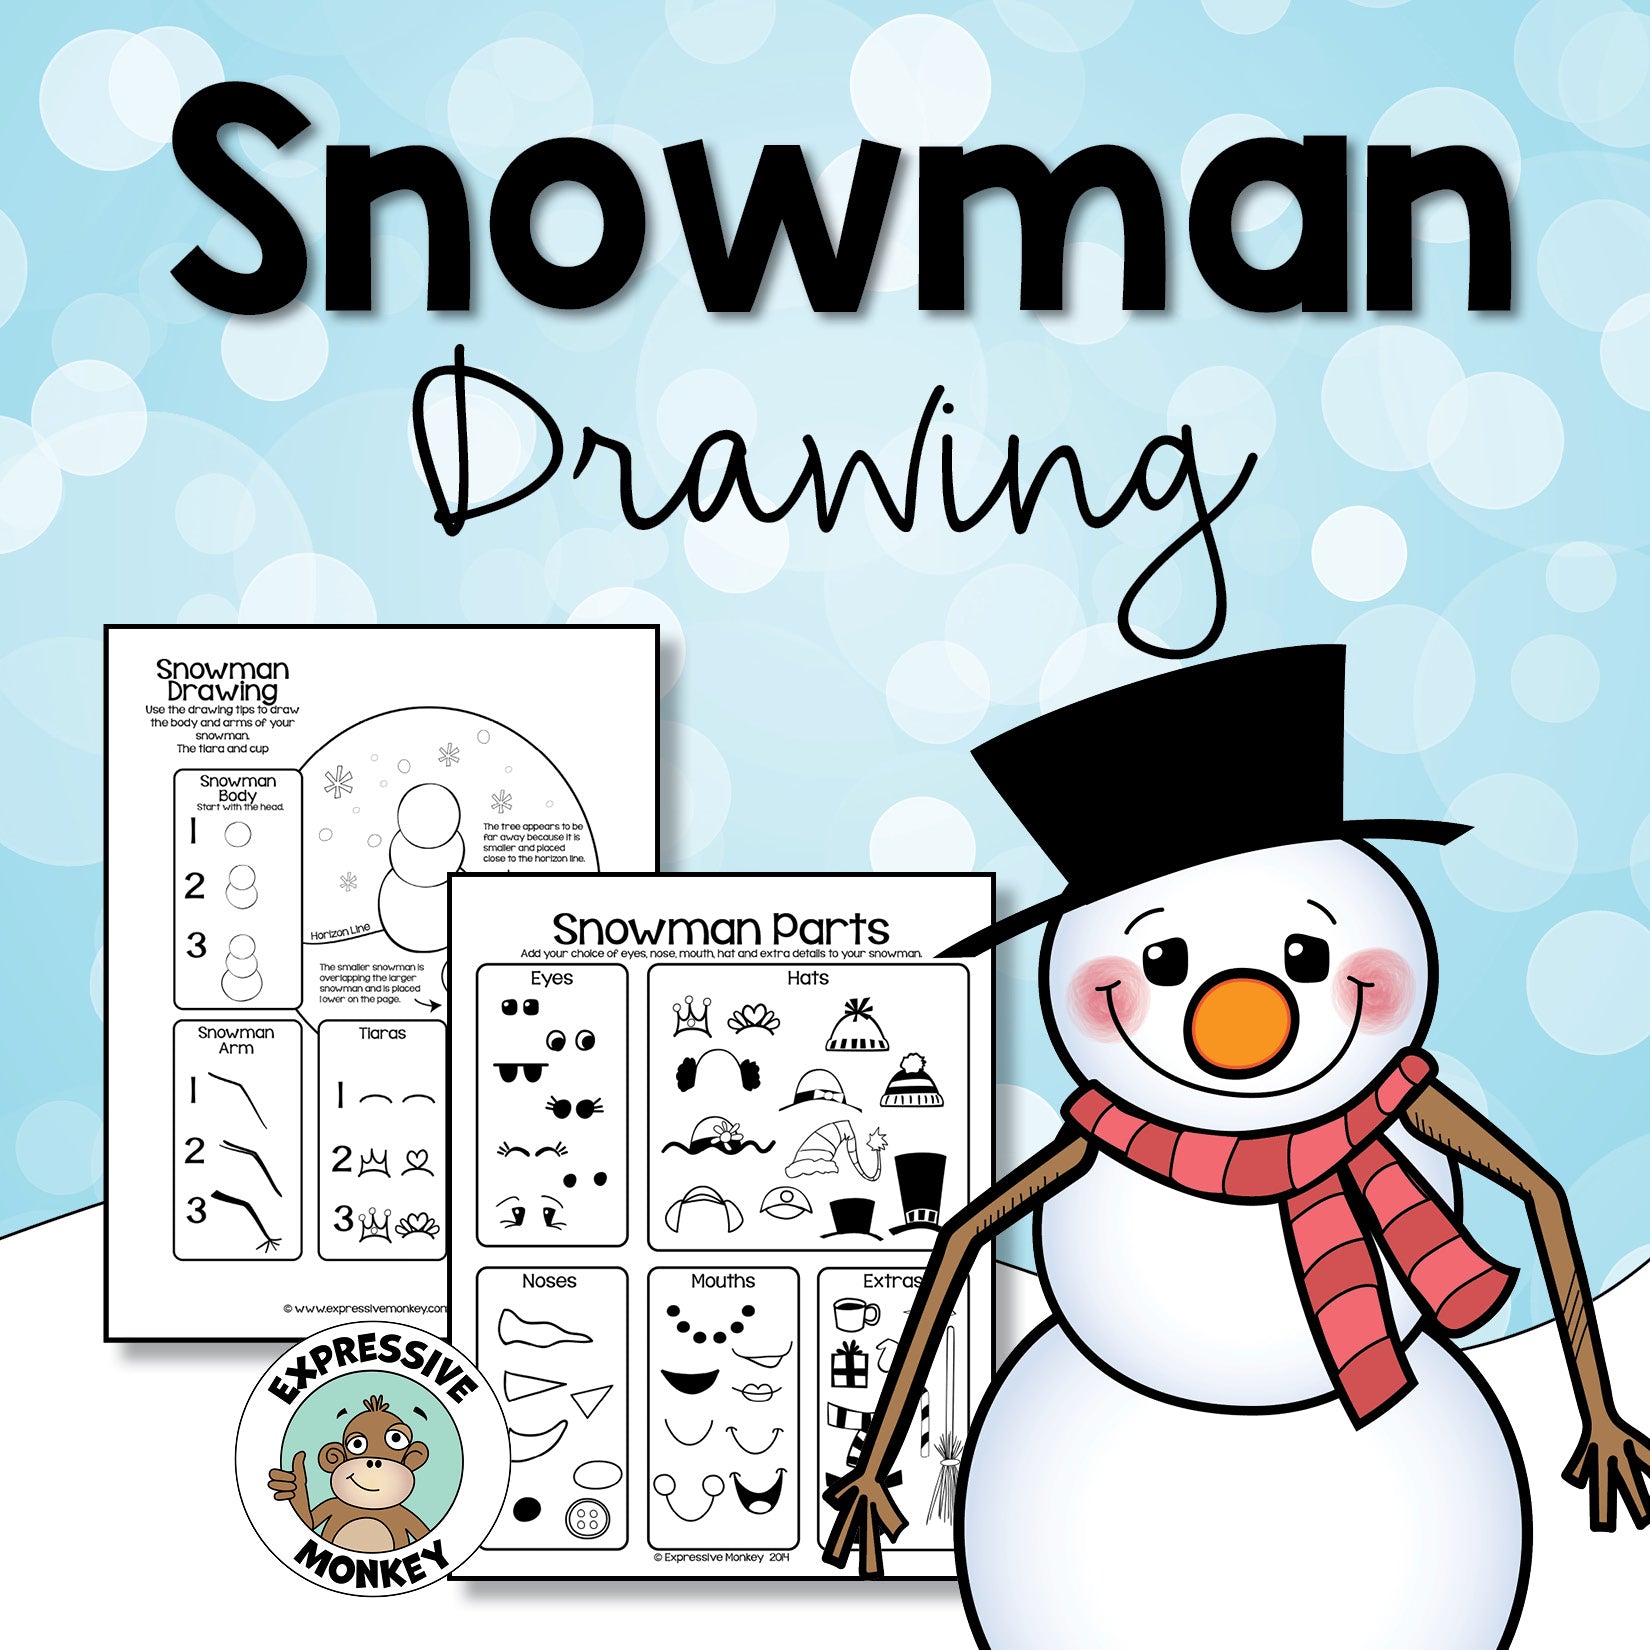 Snowman Drawing Winter Art Activity Expressive Monkey